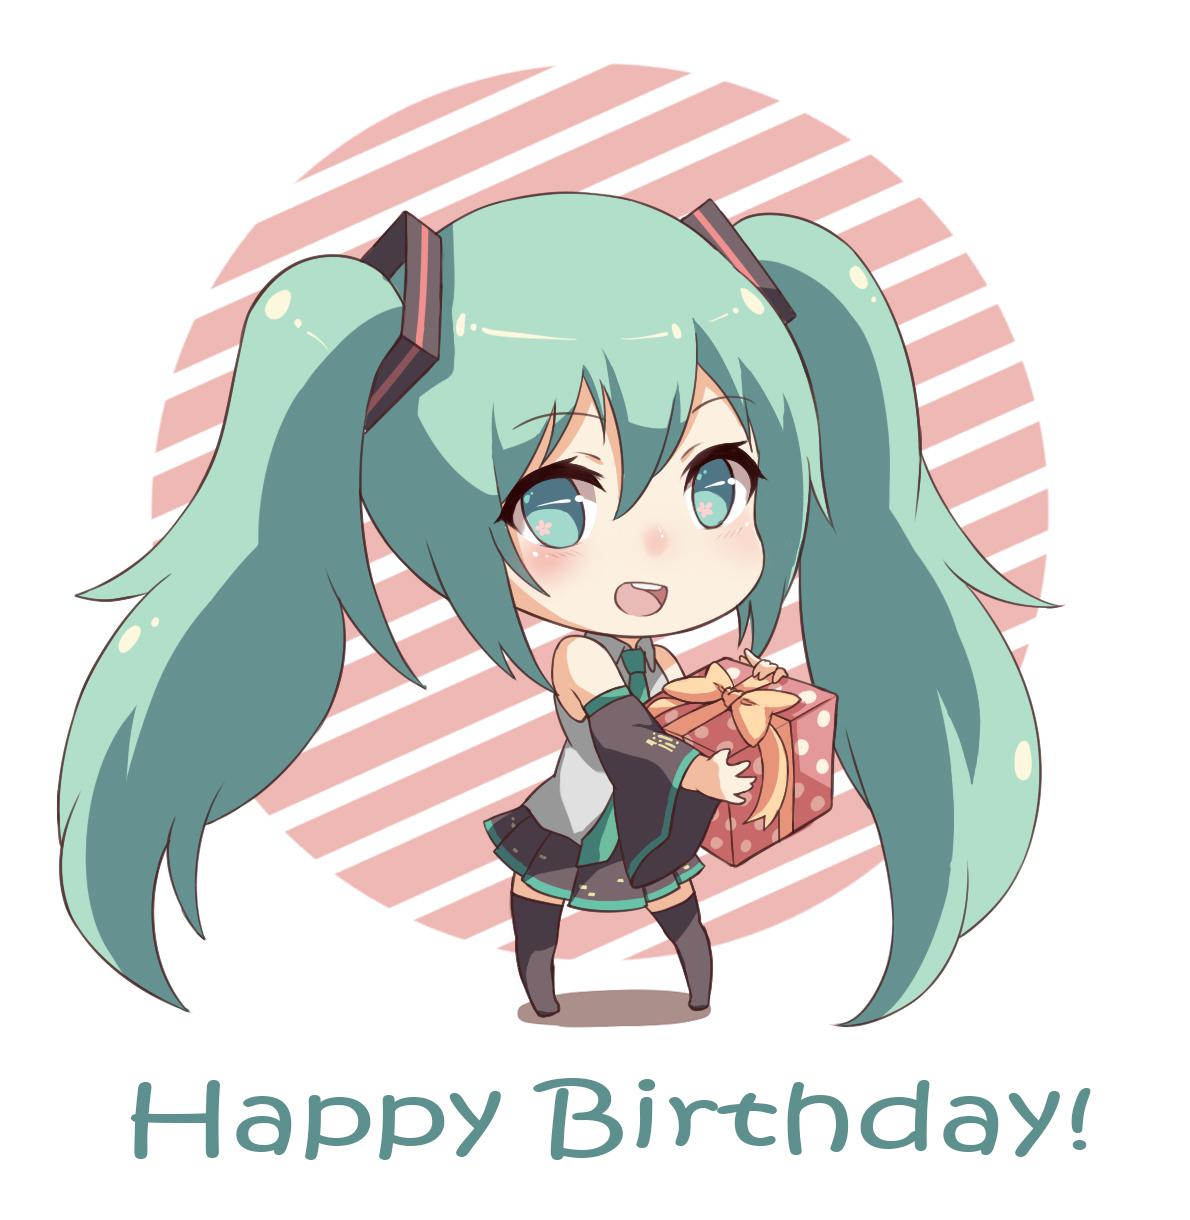 Happy Birthday Miku插画图片壁纸